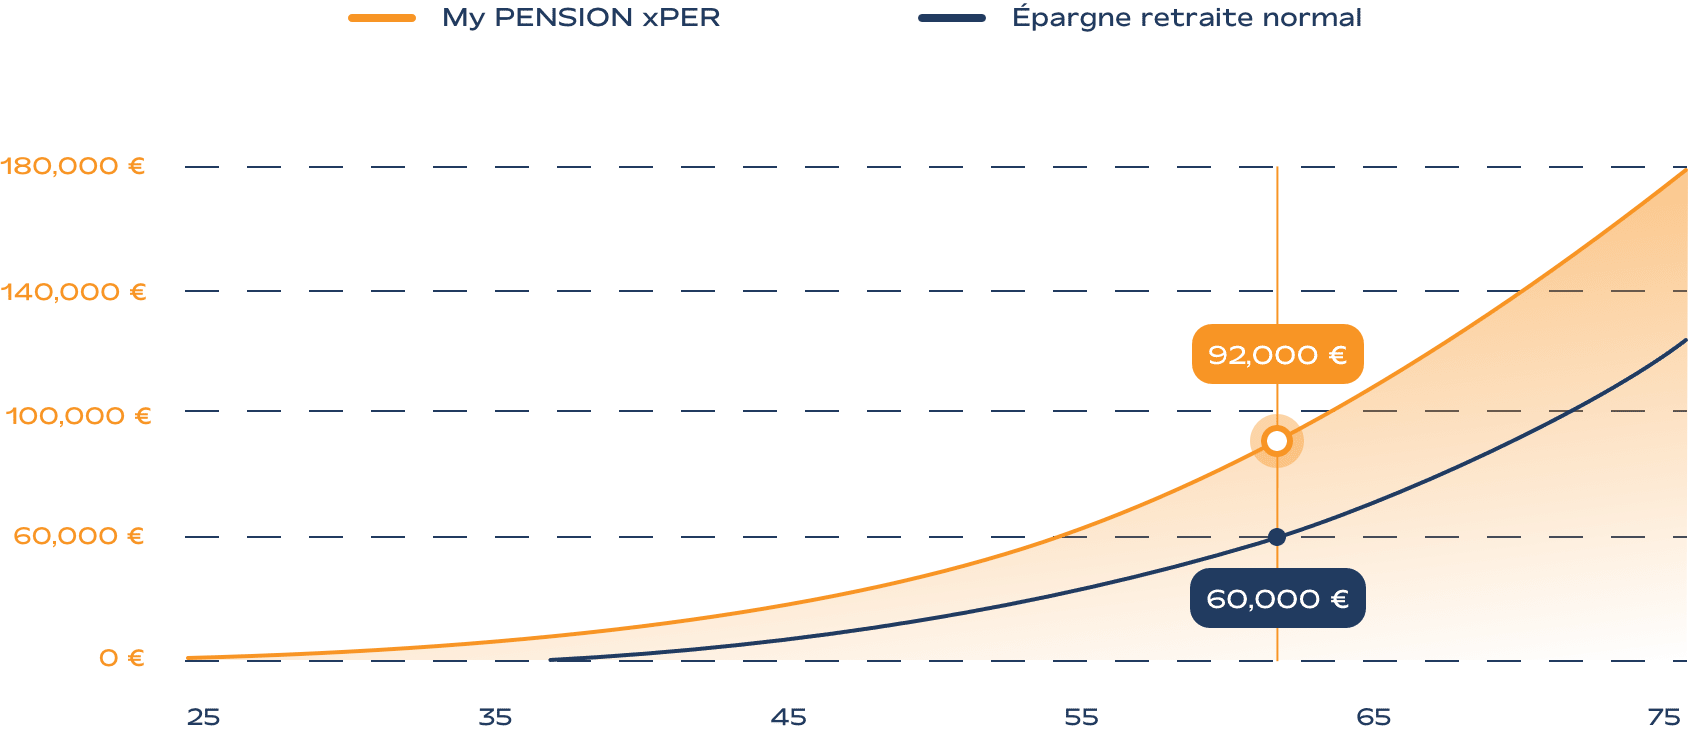 Graphe exemple de bilan retraite